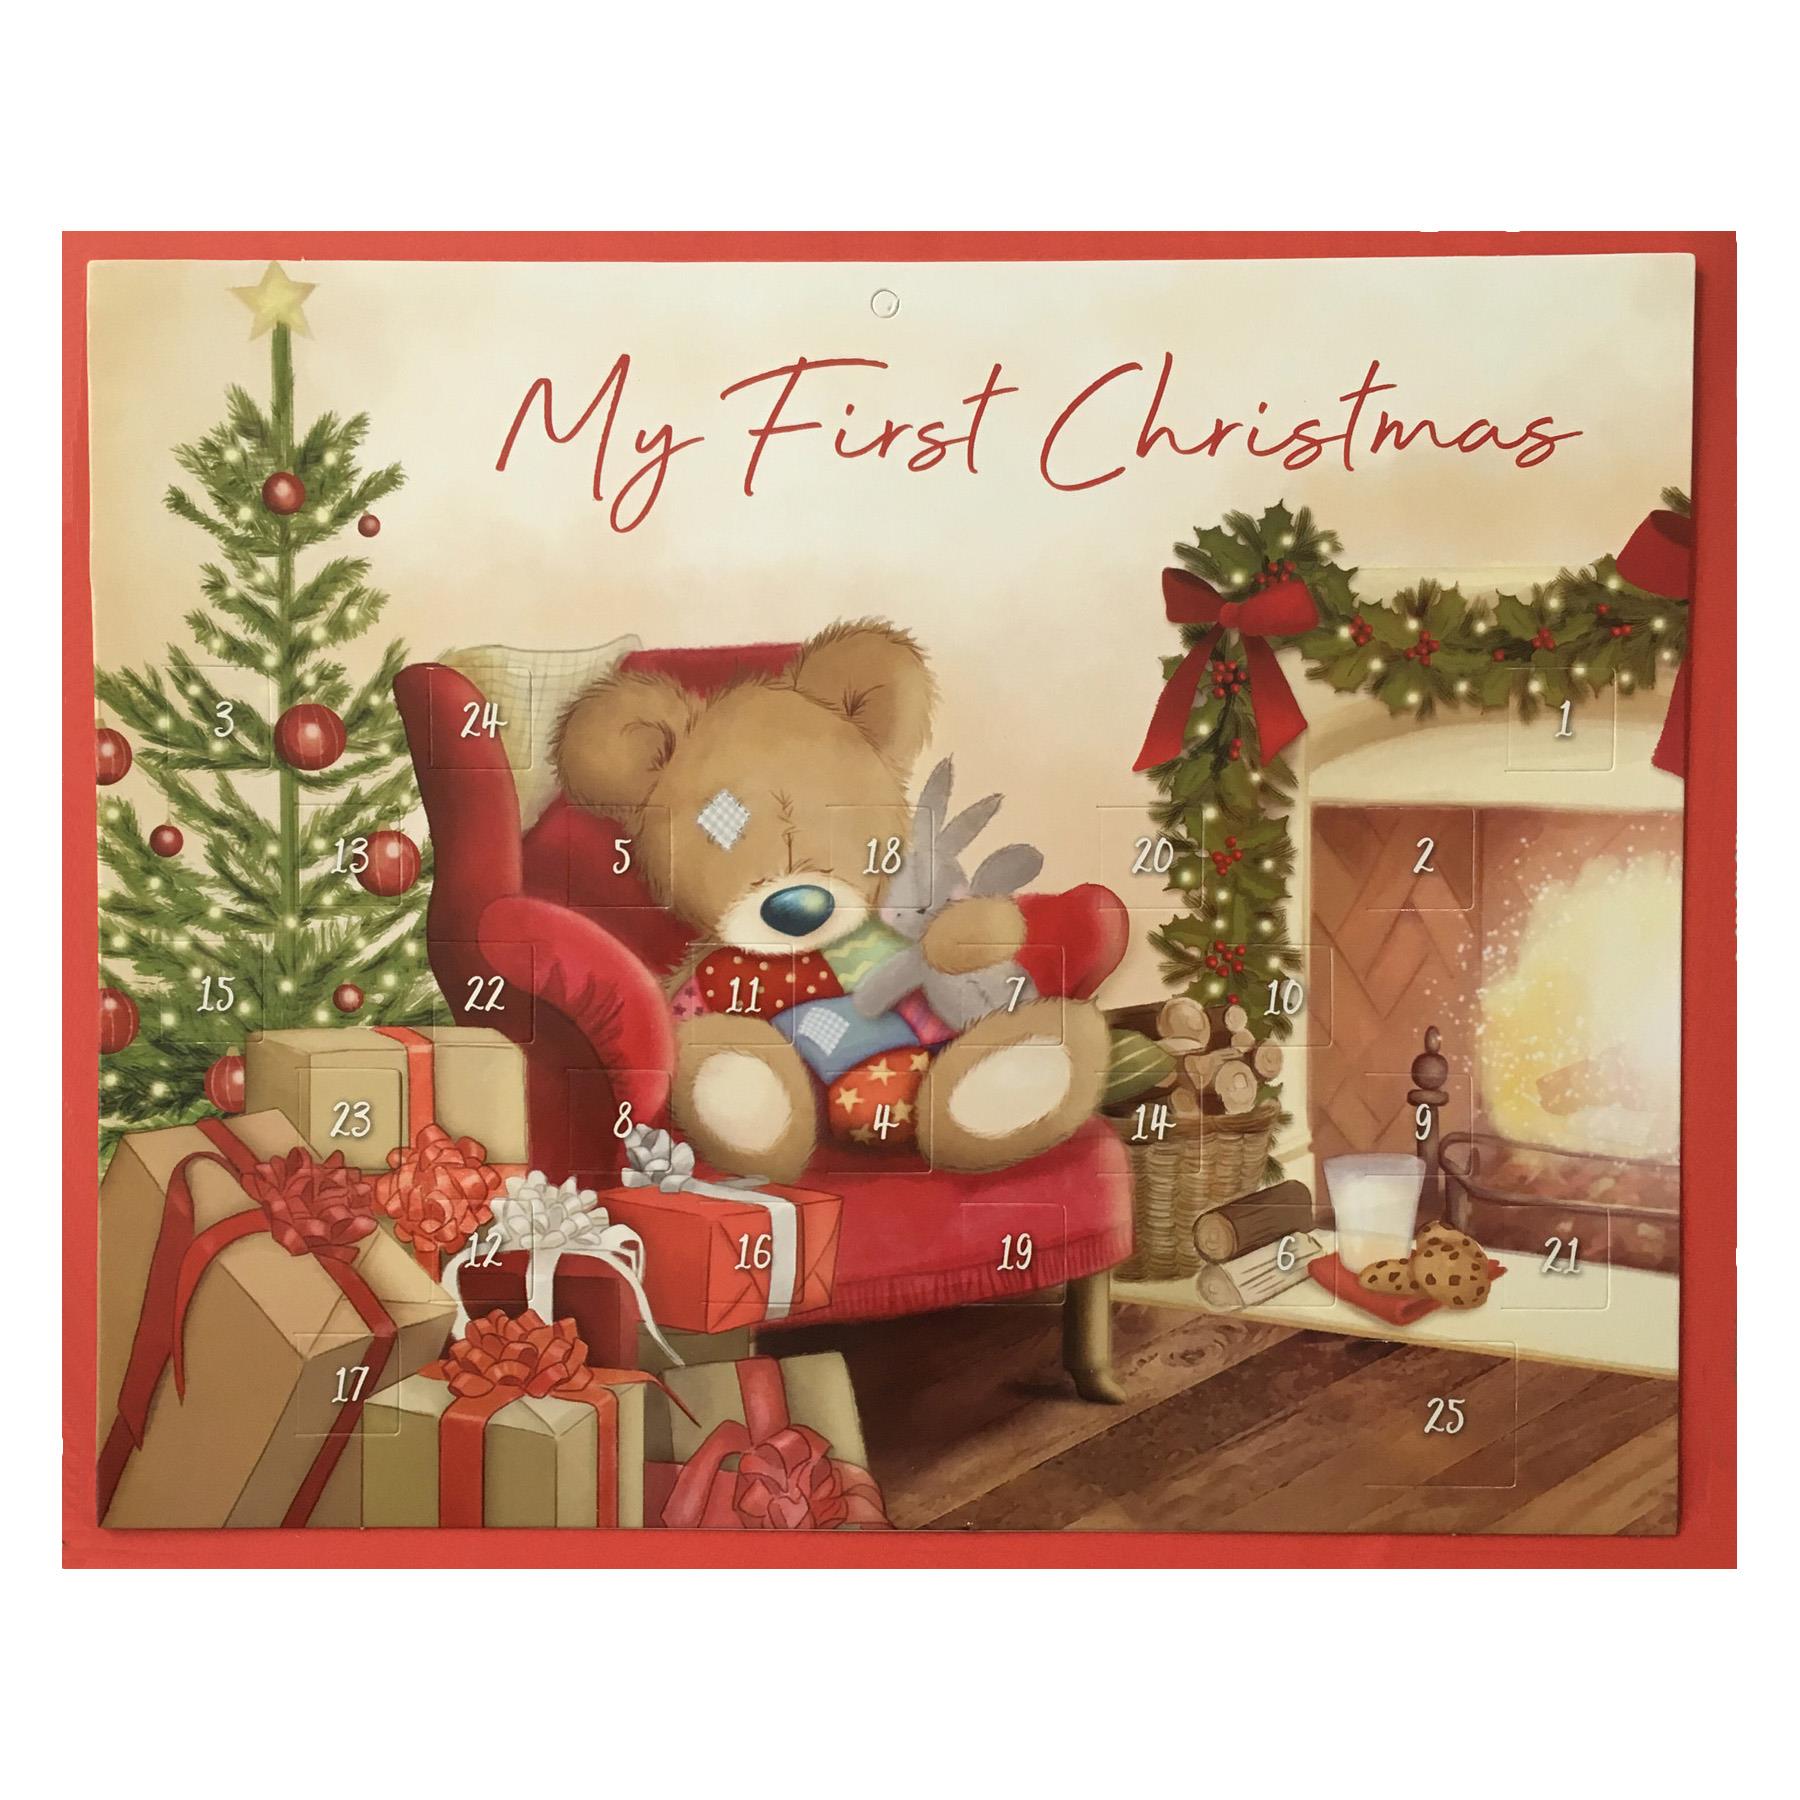 My First Christmas Advent Calendar 250mm x 200mm